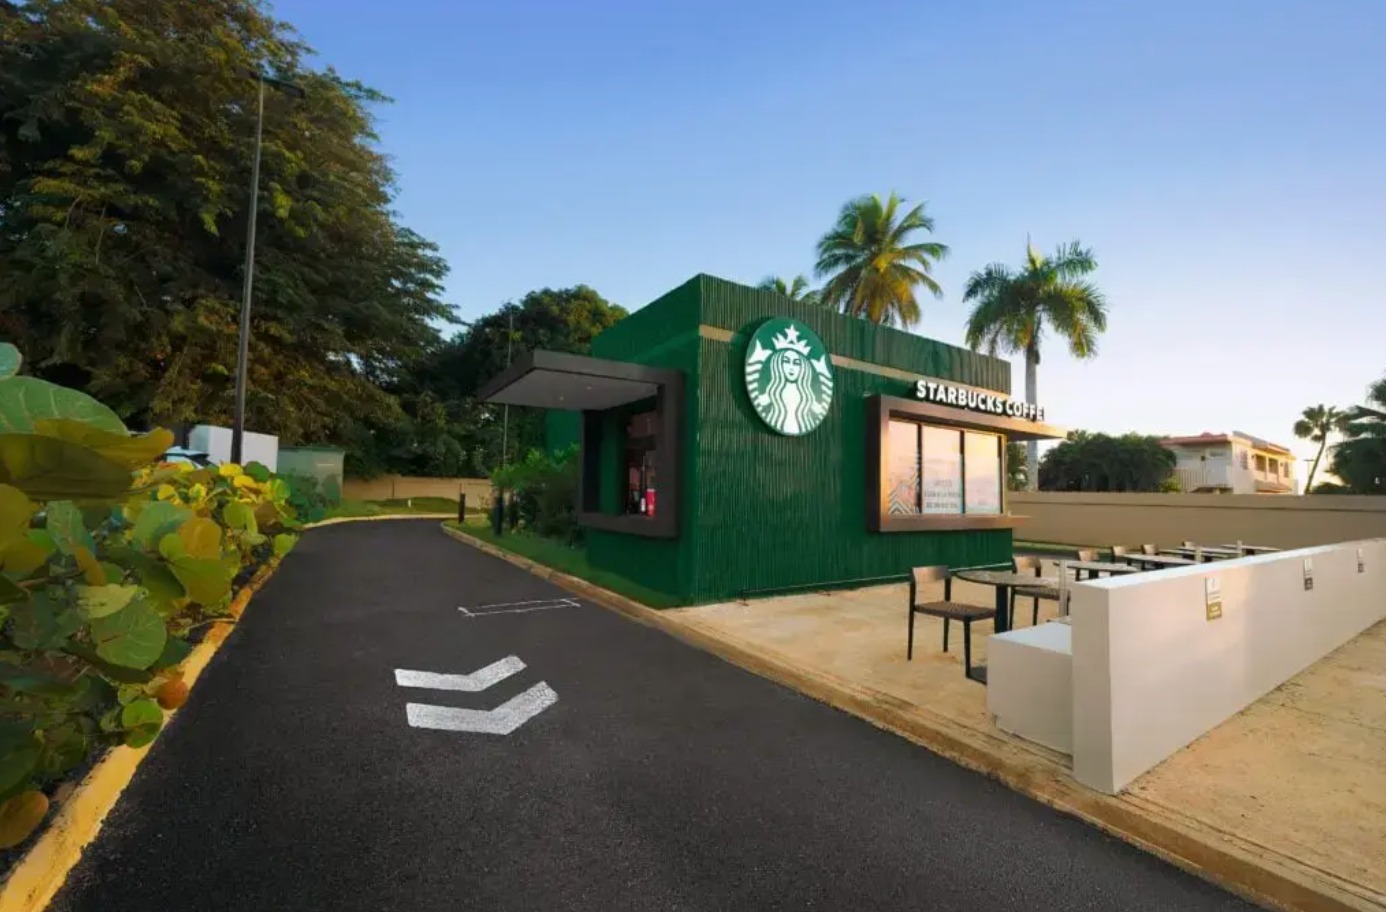 Starbucks Dorado Express, Puerto Rico